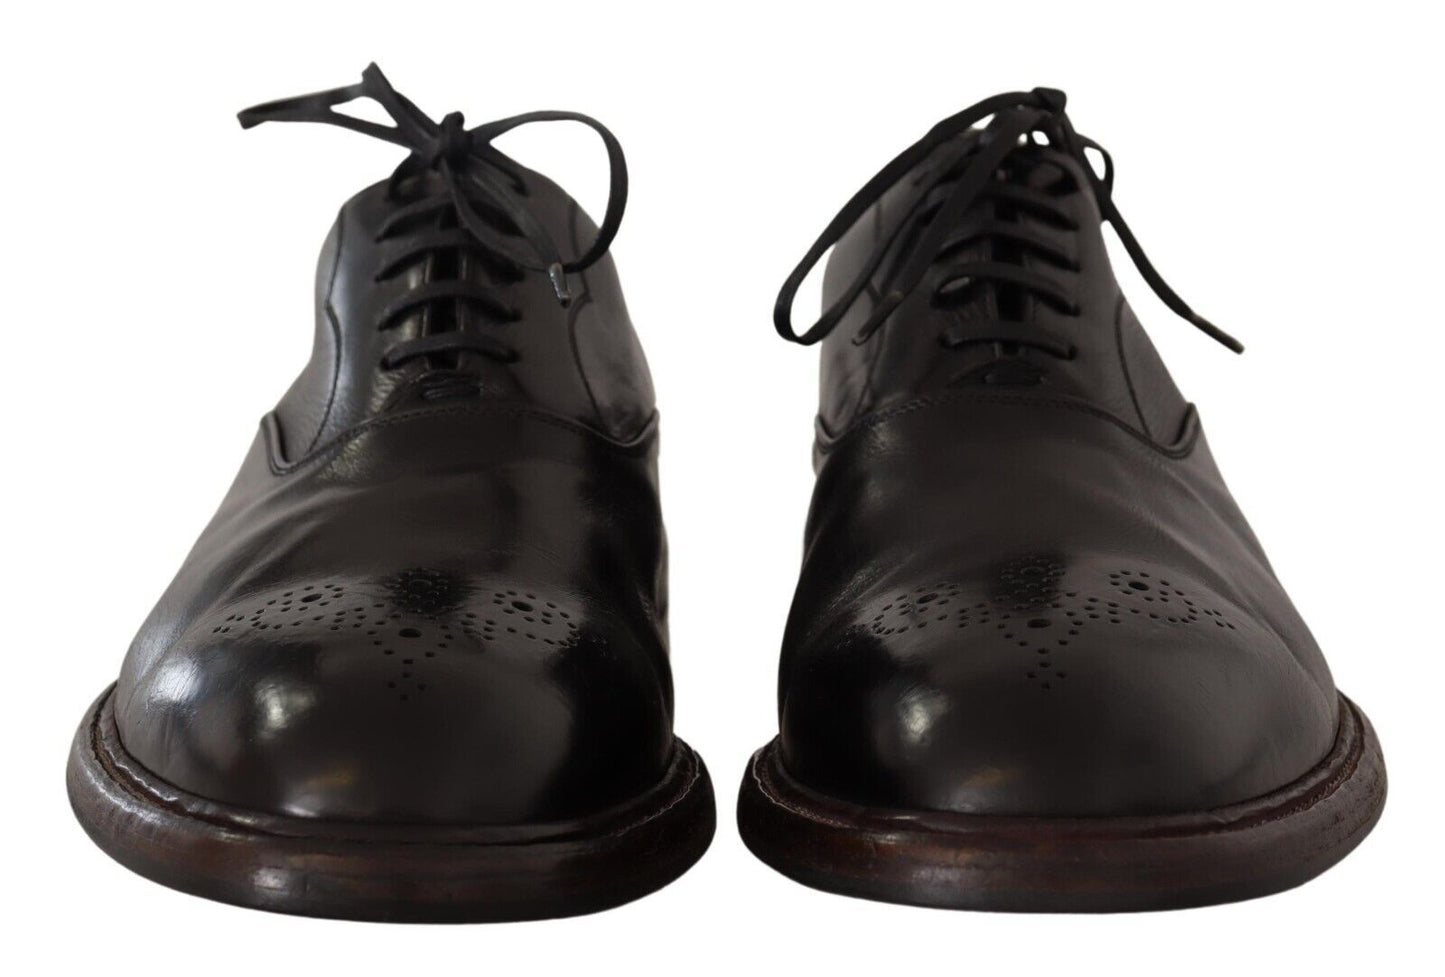 Black Leather Mens Lace Up Derby Shoes